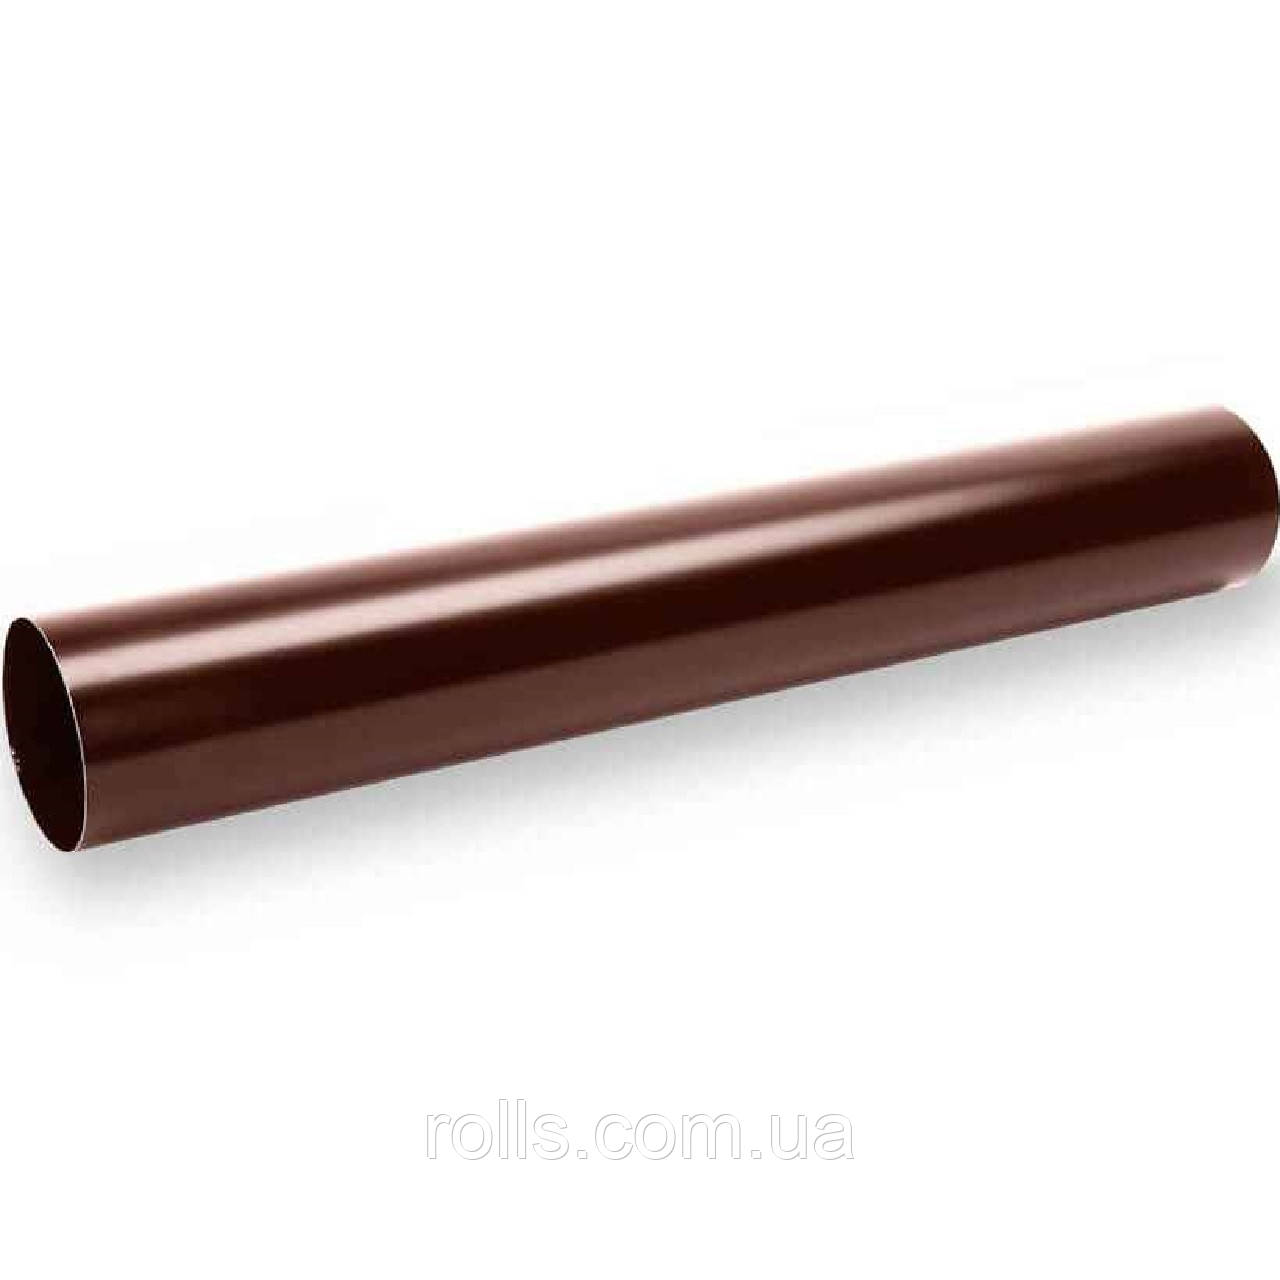 Труба водосточная 4м Galeco PVC 130/100 труба водостічна 4м SP100-_-RU400-G Шоколадно-коричневий